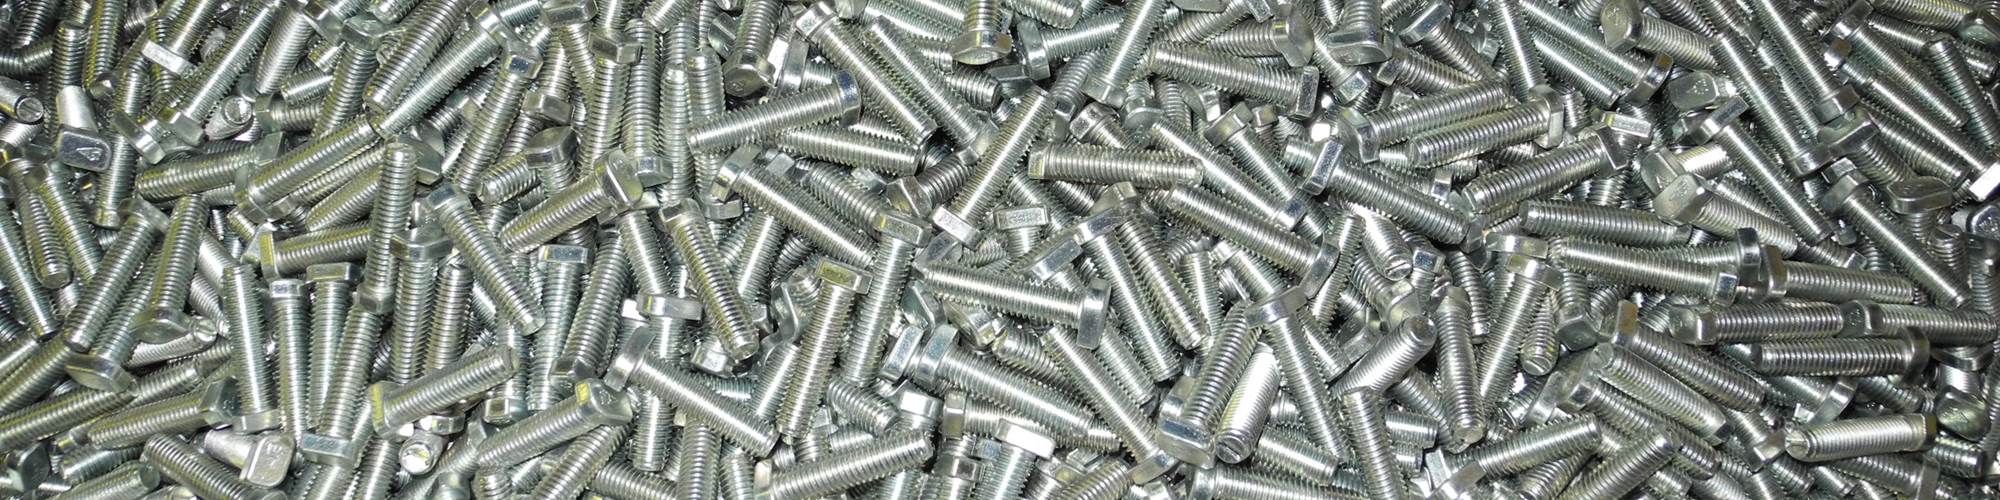 Zinc-electroplated screws